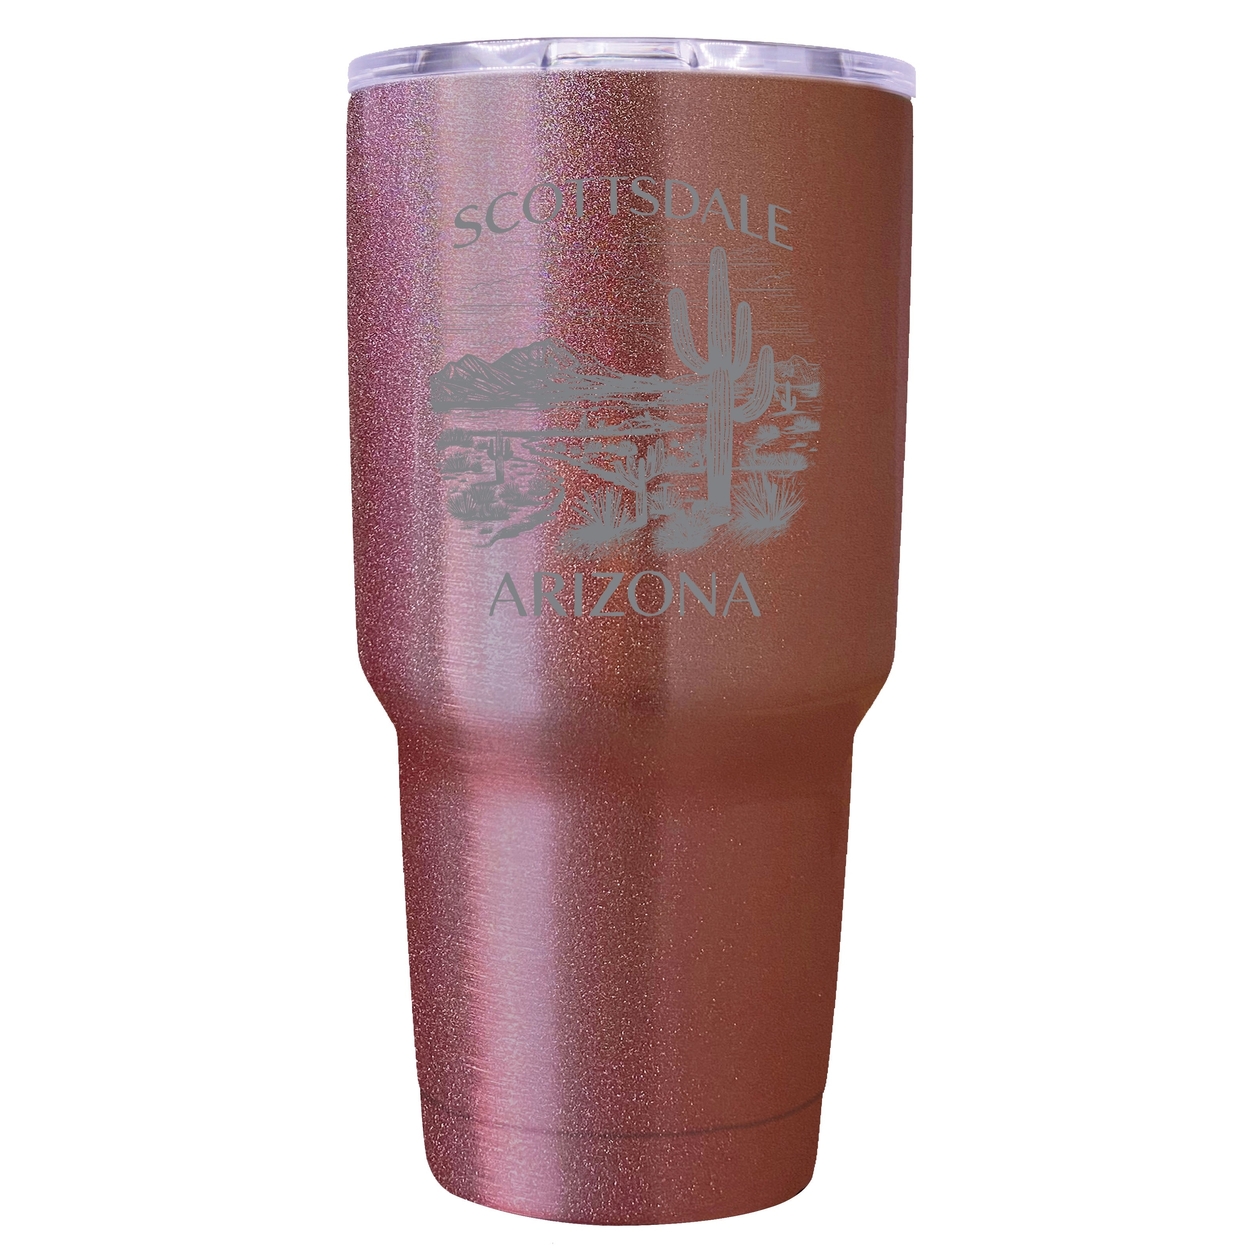 Scottsdale Arizona Souvenir 24 Oz Engraved Insulated Stainless Steel Tumbler - Rose Gold,,Single Unit